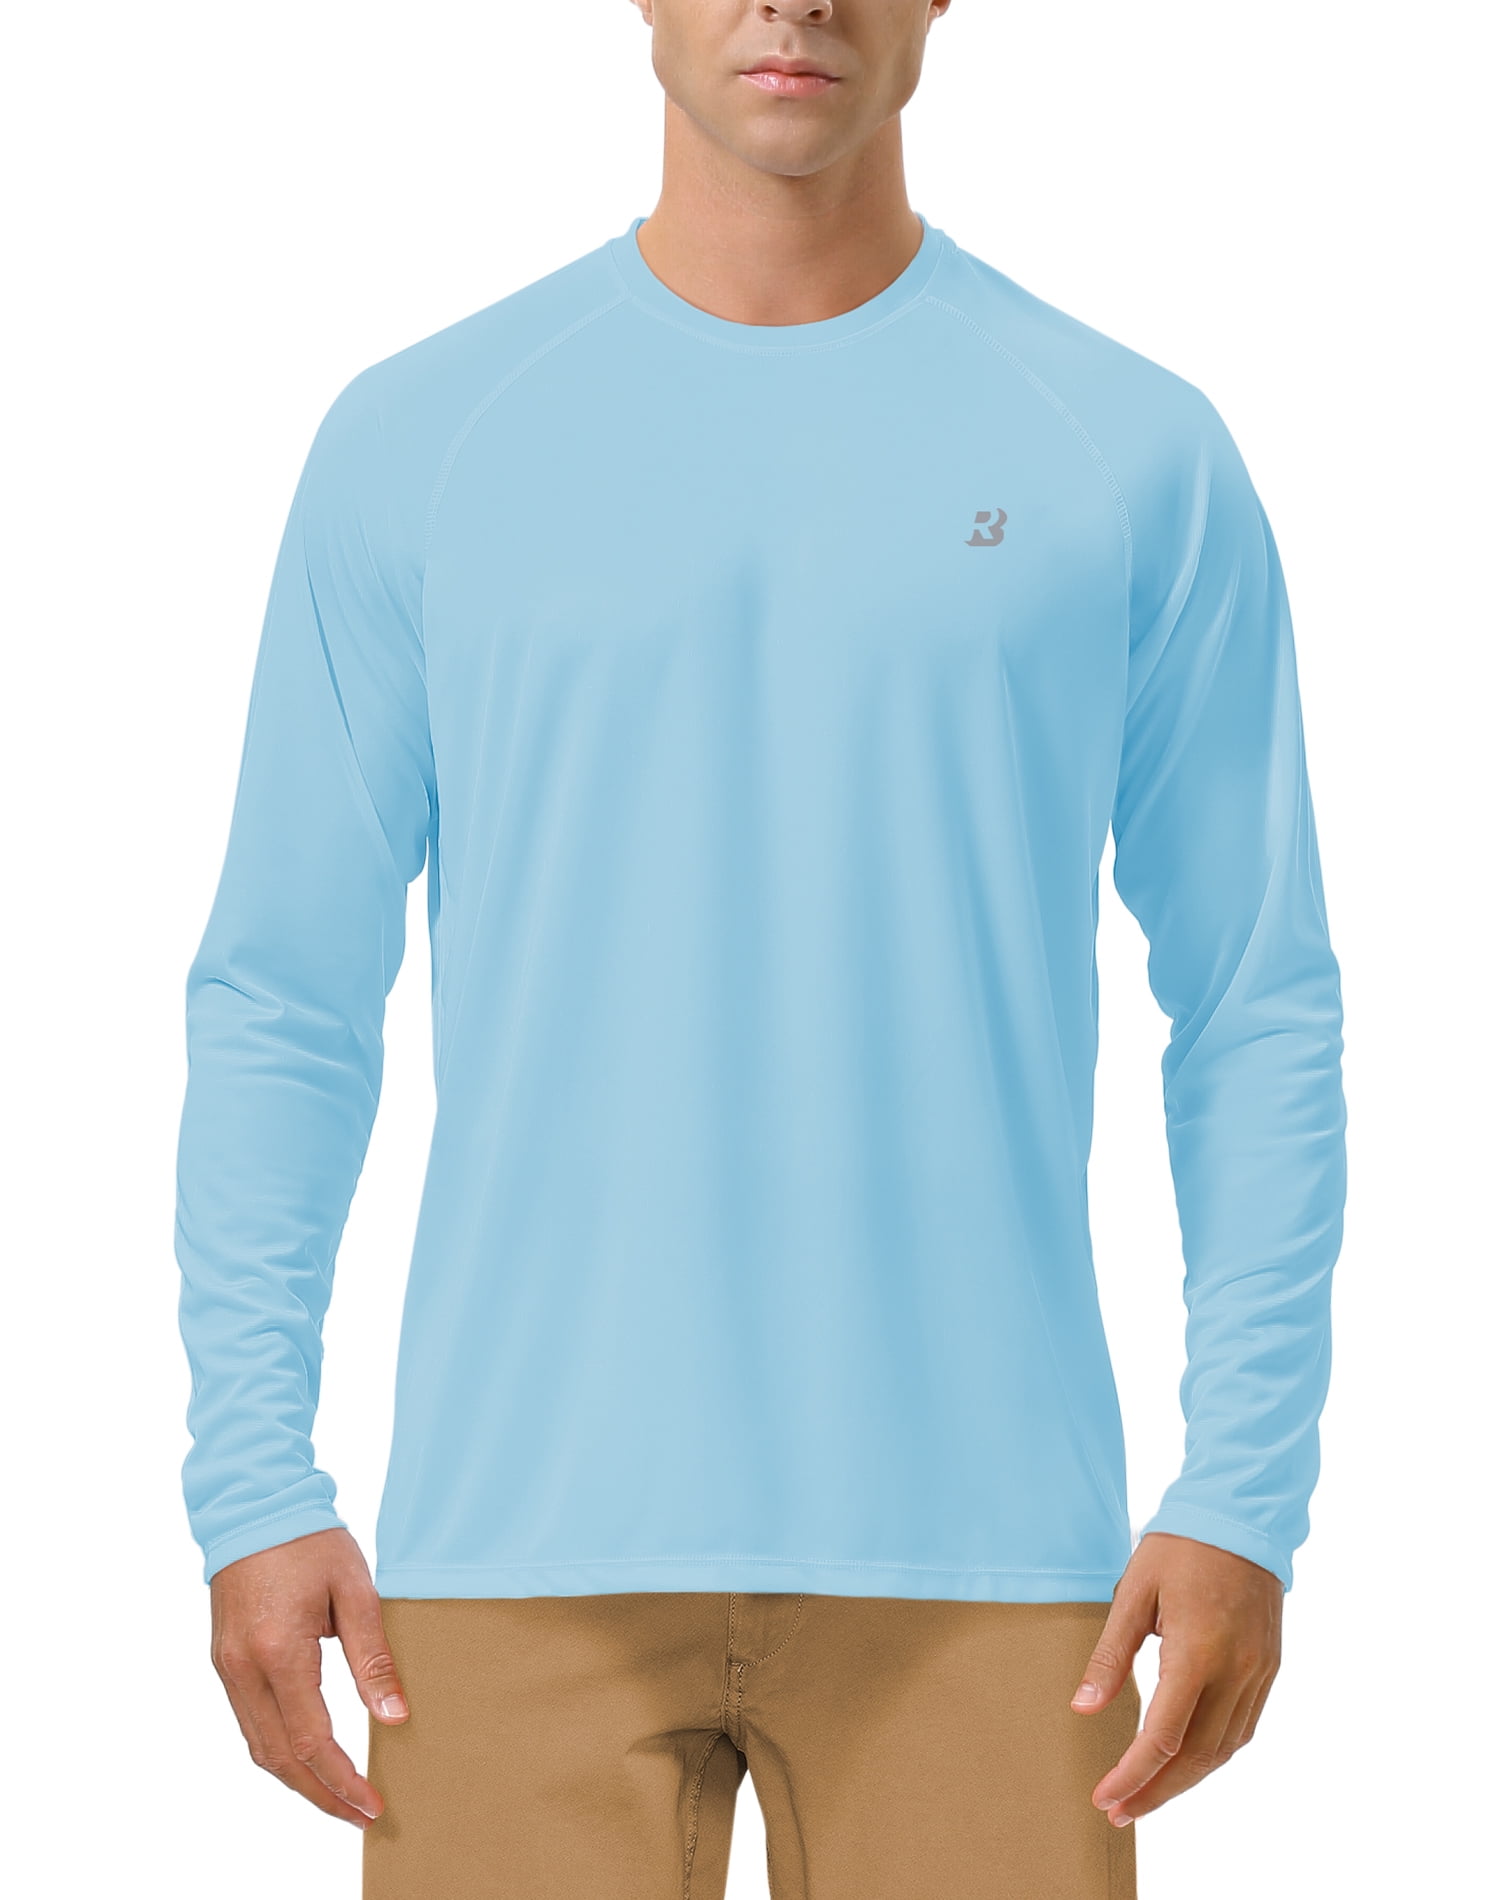 Roadbox Fishing Shirts for Men Long Sleeve UV Sun Protection Tops UPF 50+ Black, Men's, Size: Large